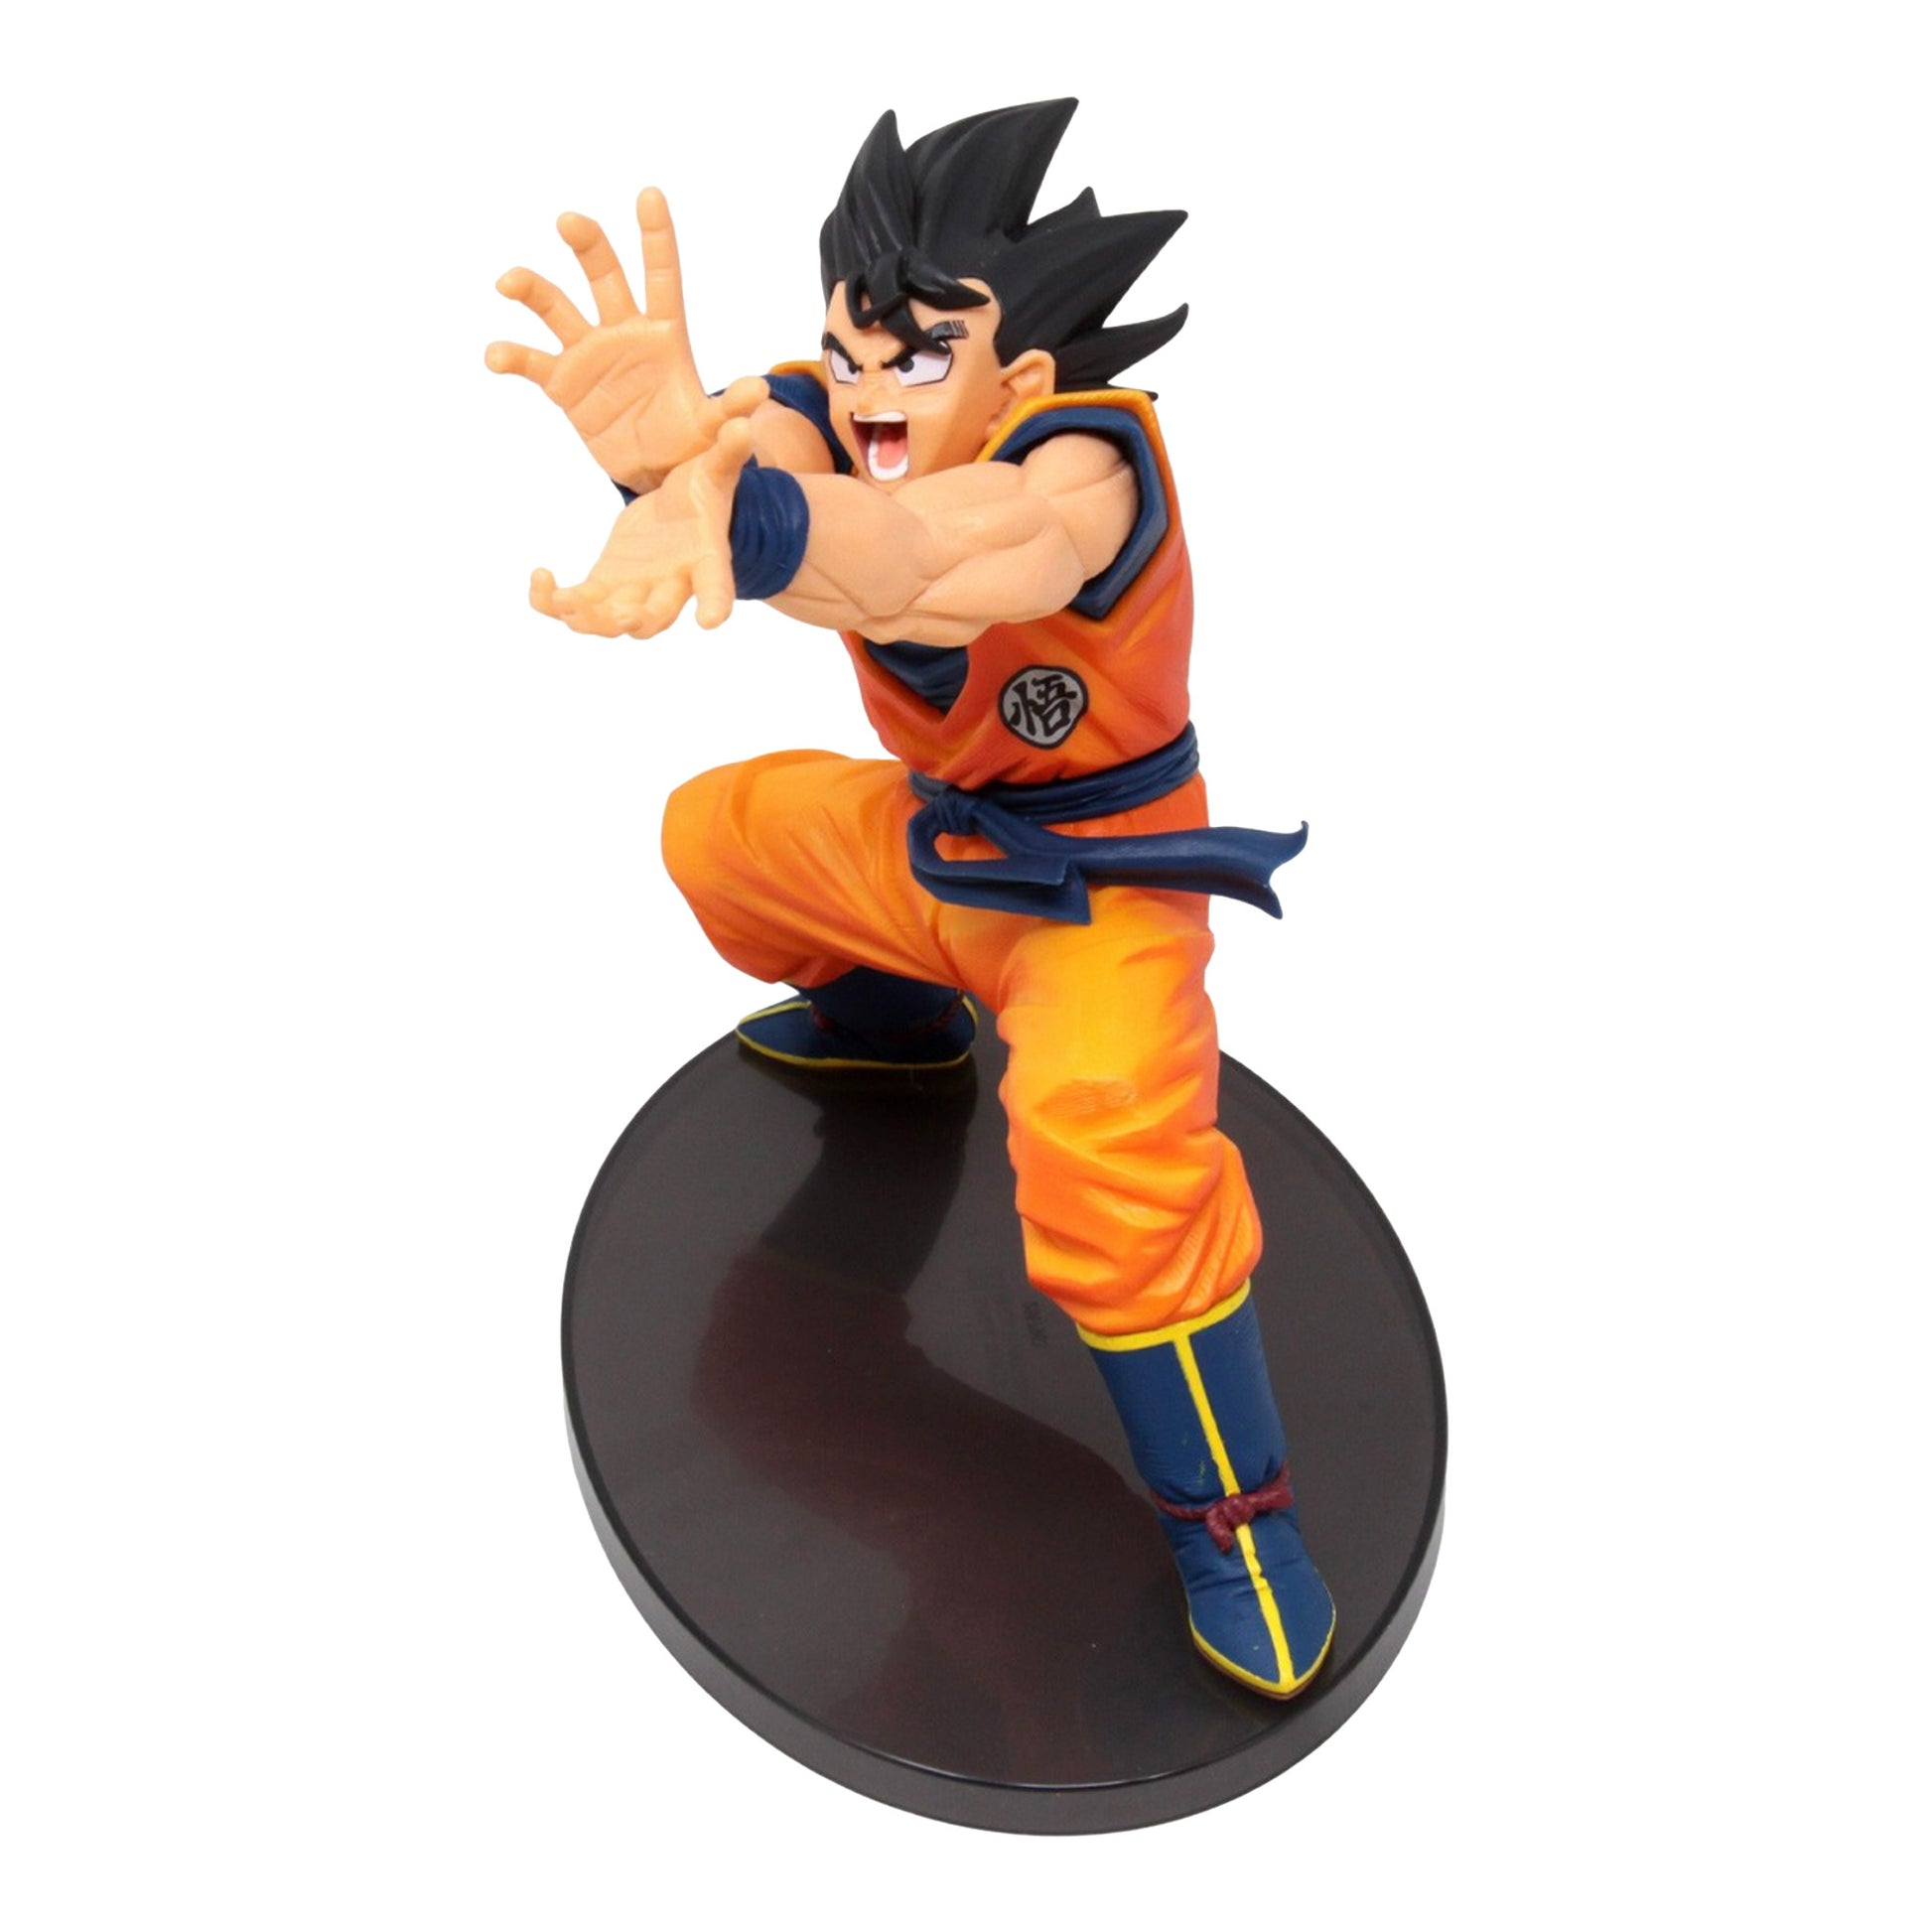 Son Goku Super Sayajin 3 - Dragon Ball Super - Fes Banpresto